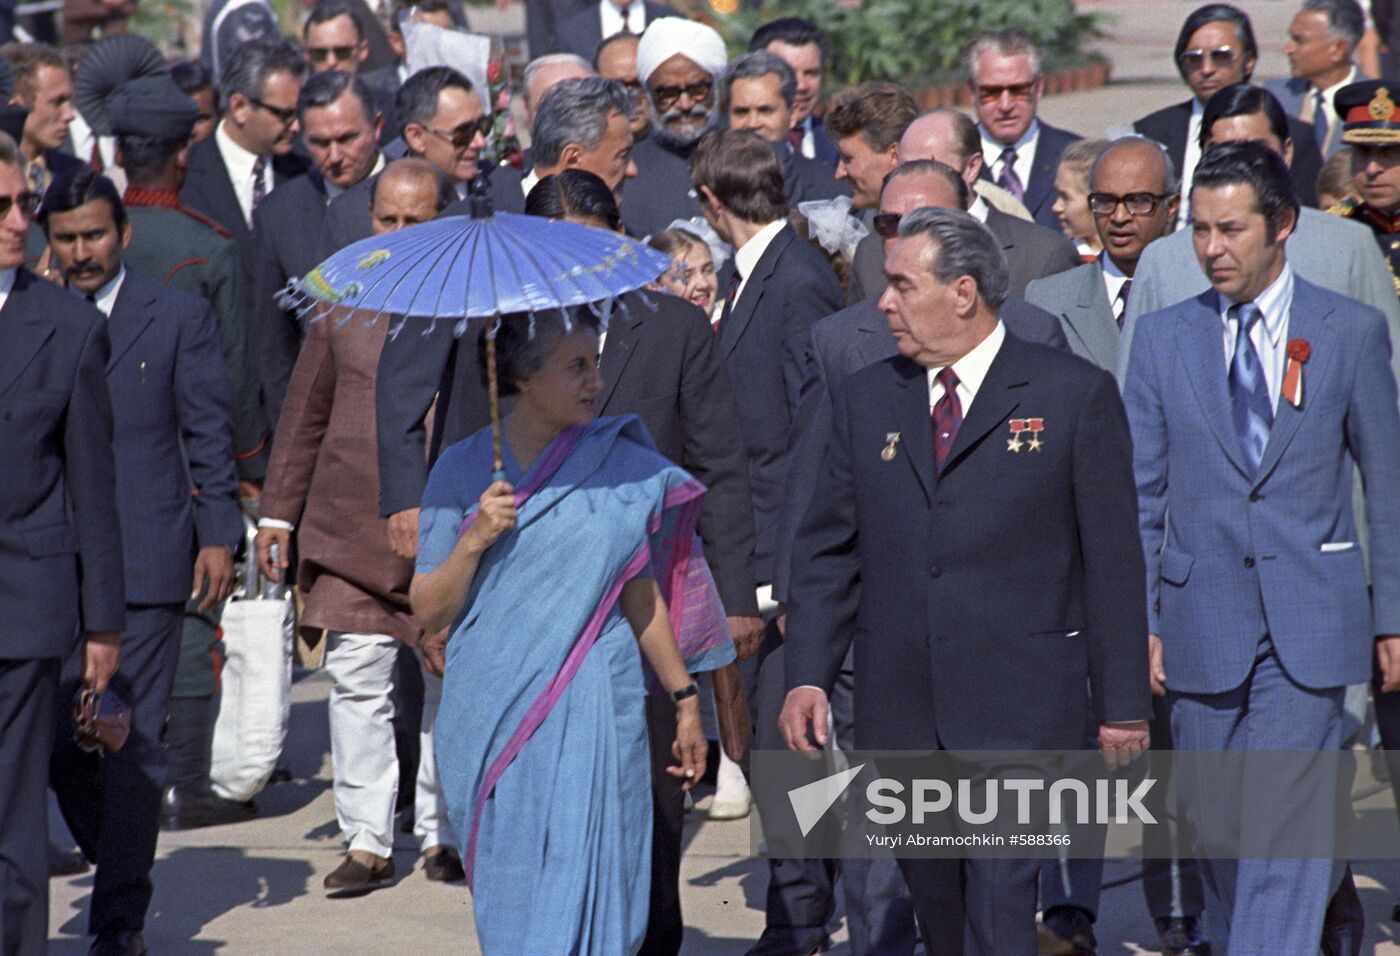 L.I.Brezhnev to visit Republic of India